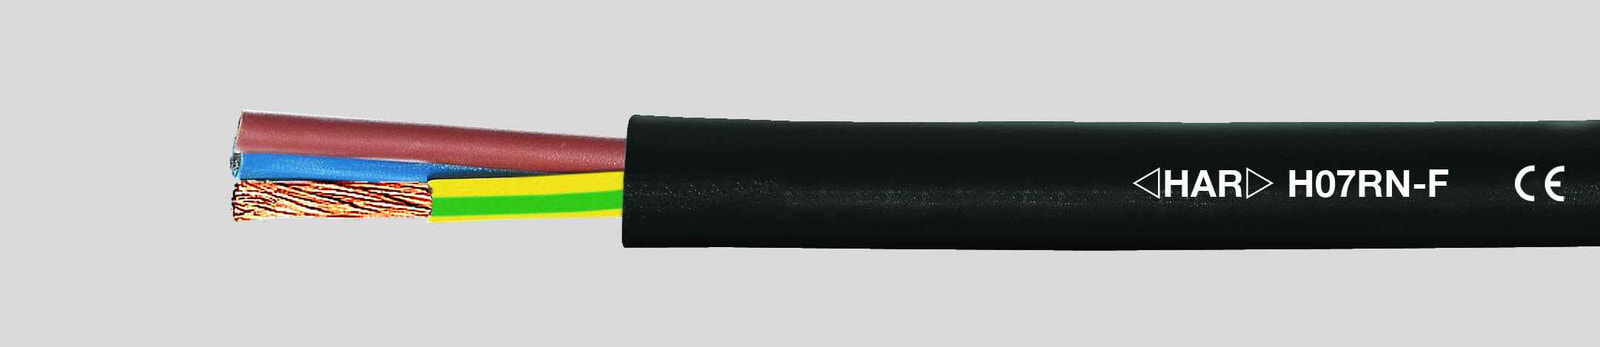 Helukabel H07RN-F - Low voltage cable - Black - Cooper - 1.5 mm² - 72 kg/km - DIN VDE 0482-332-1-2 - DIN EN 60332-1-2 - IEC 60332-1-2 - DIN VDE 0473-396 - DIN EN 50396 - DIN VDE...